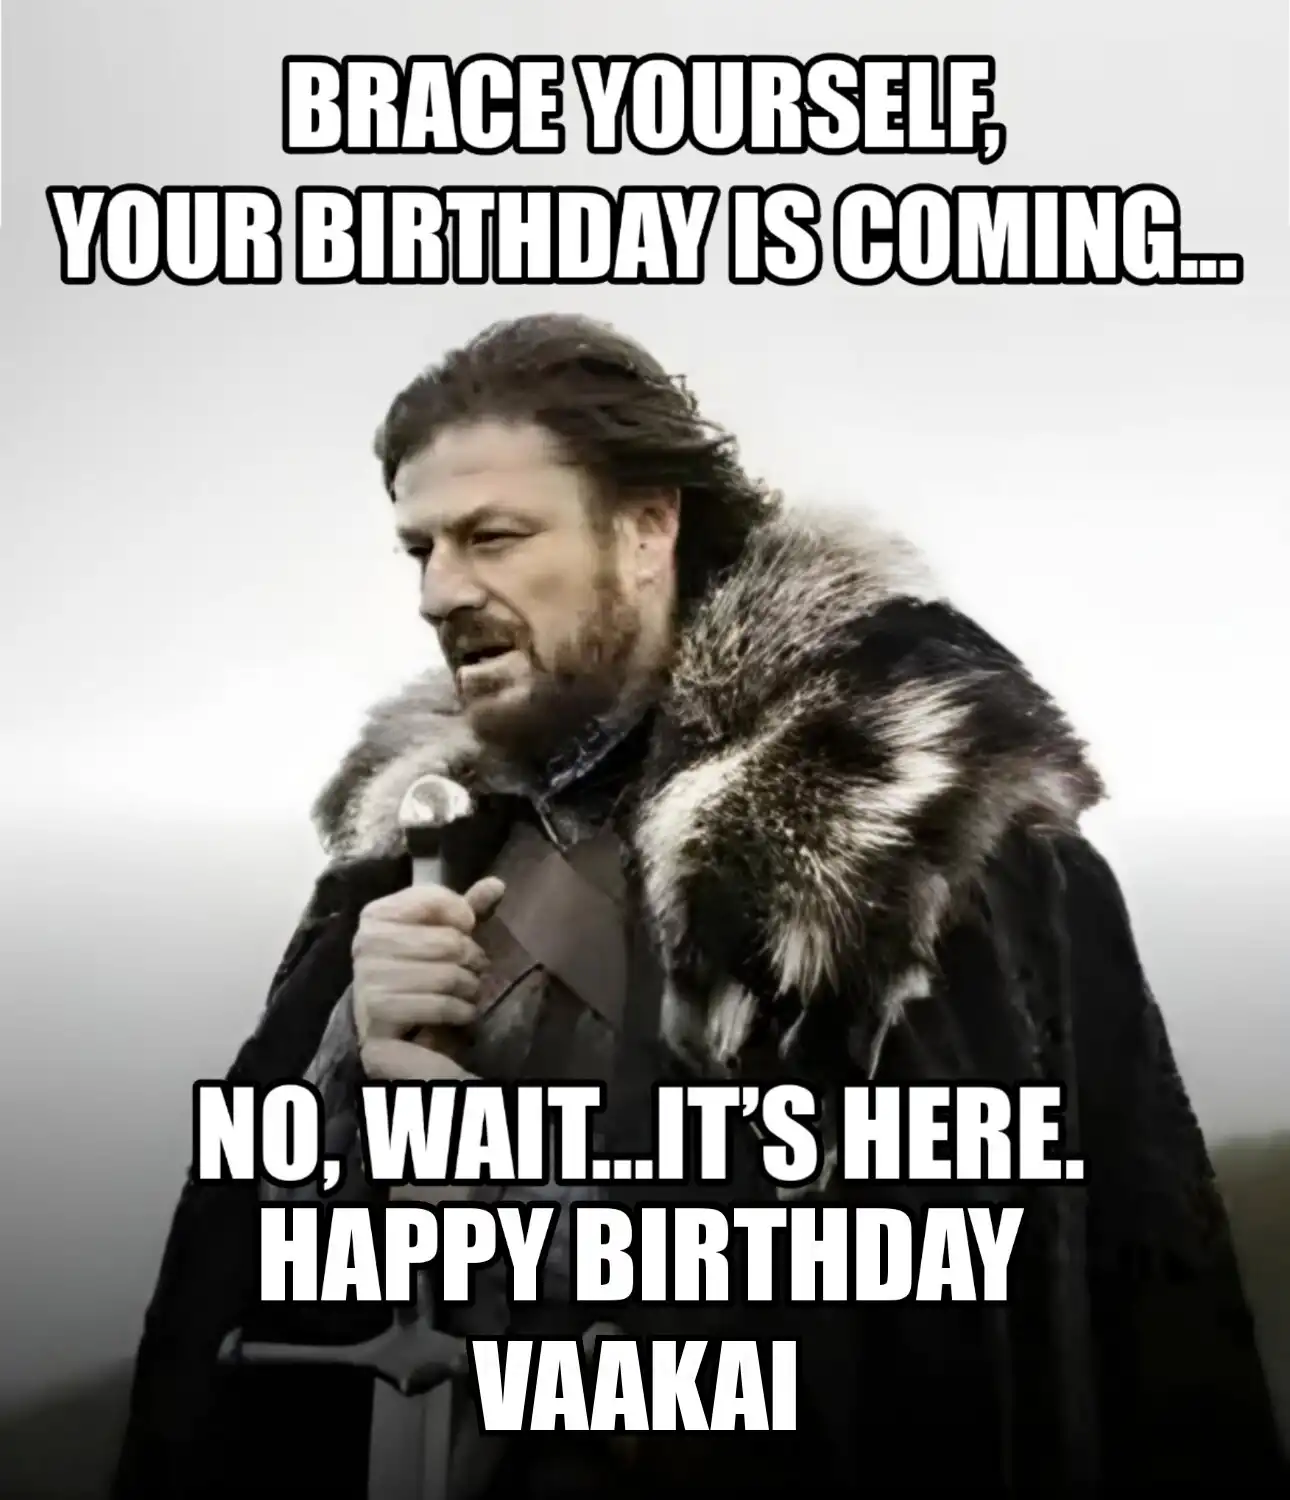 Happy Birthday Vaakai Brace Yourself Your Birthday Is Coming Meme